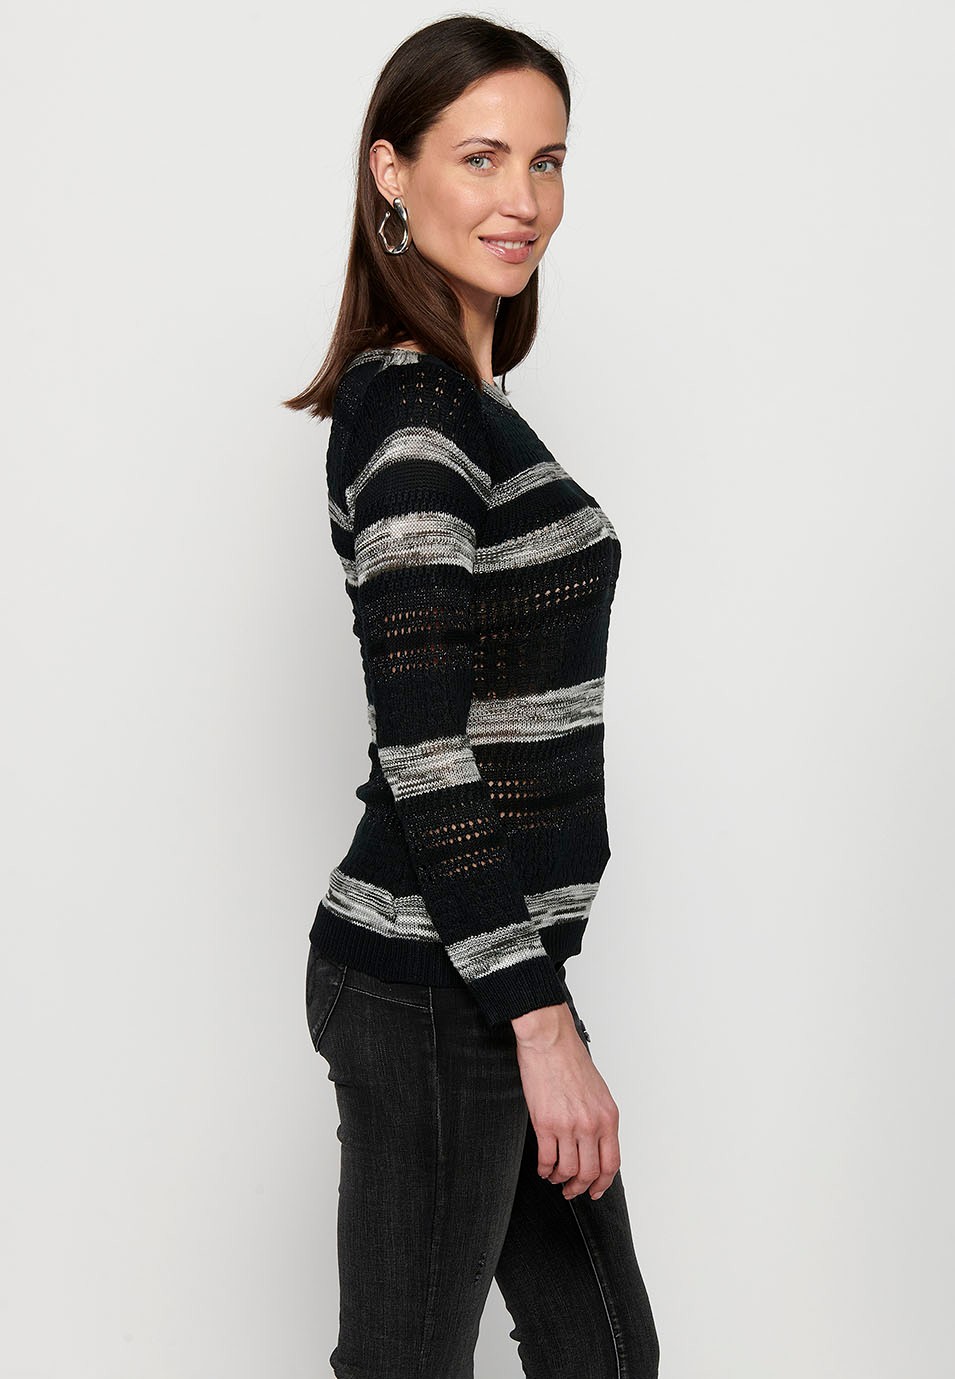 Jersey de manga larga texturizado a rayas, cuello redondo color negro para mujer